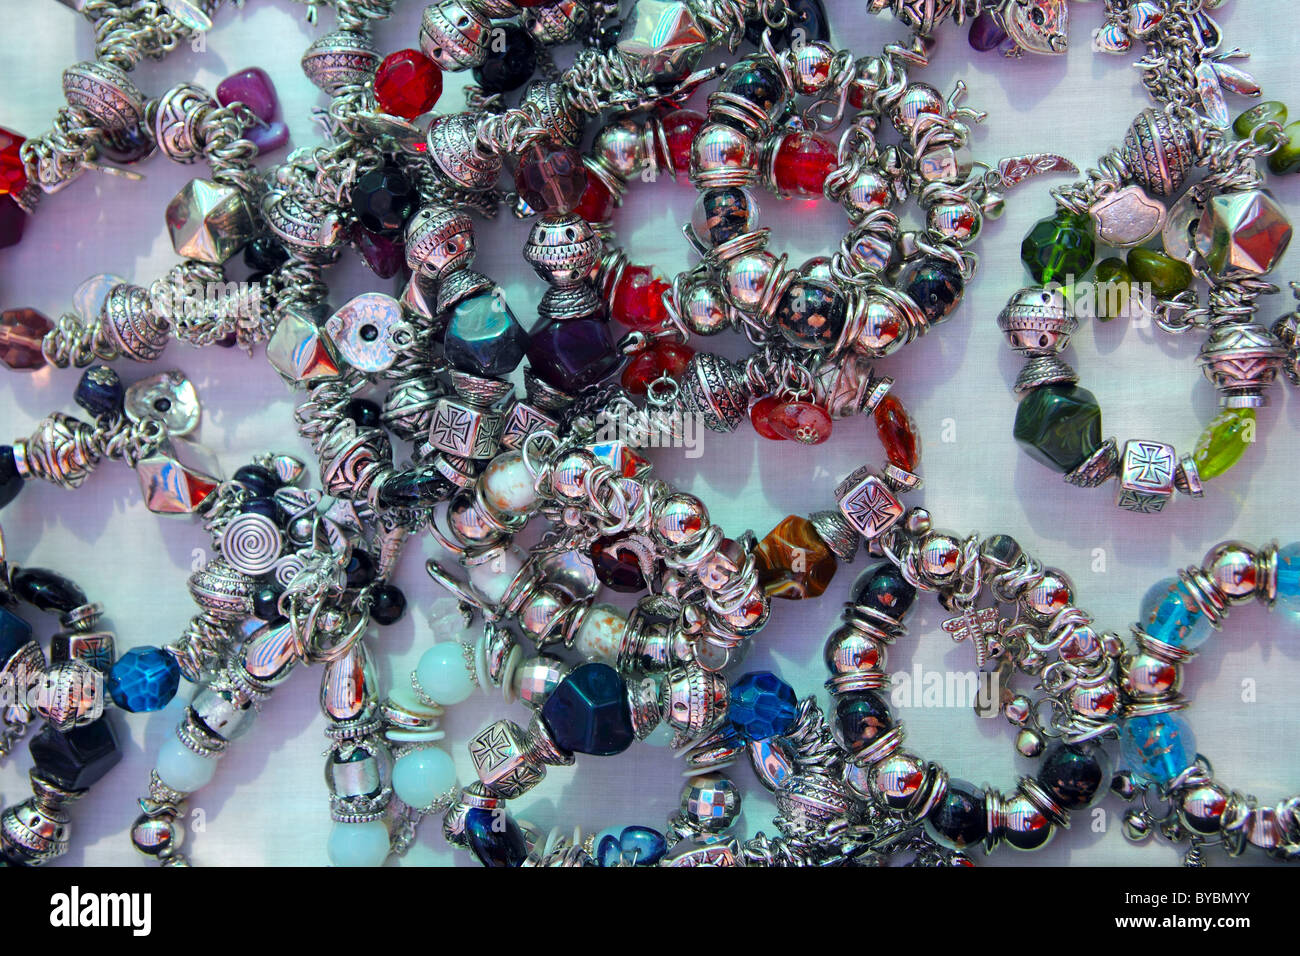 silver jewel bracelet shop display colorful stones Stock Photo